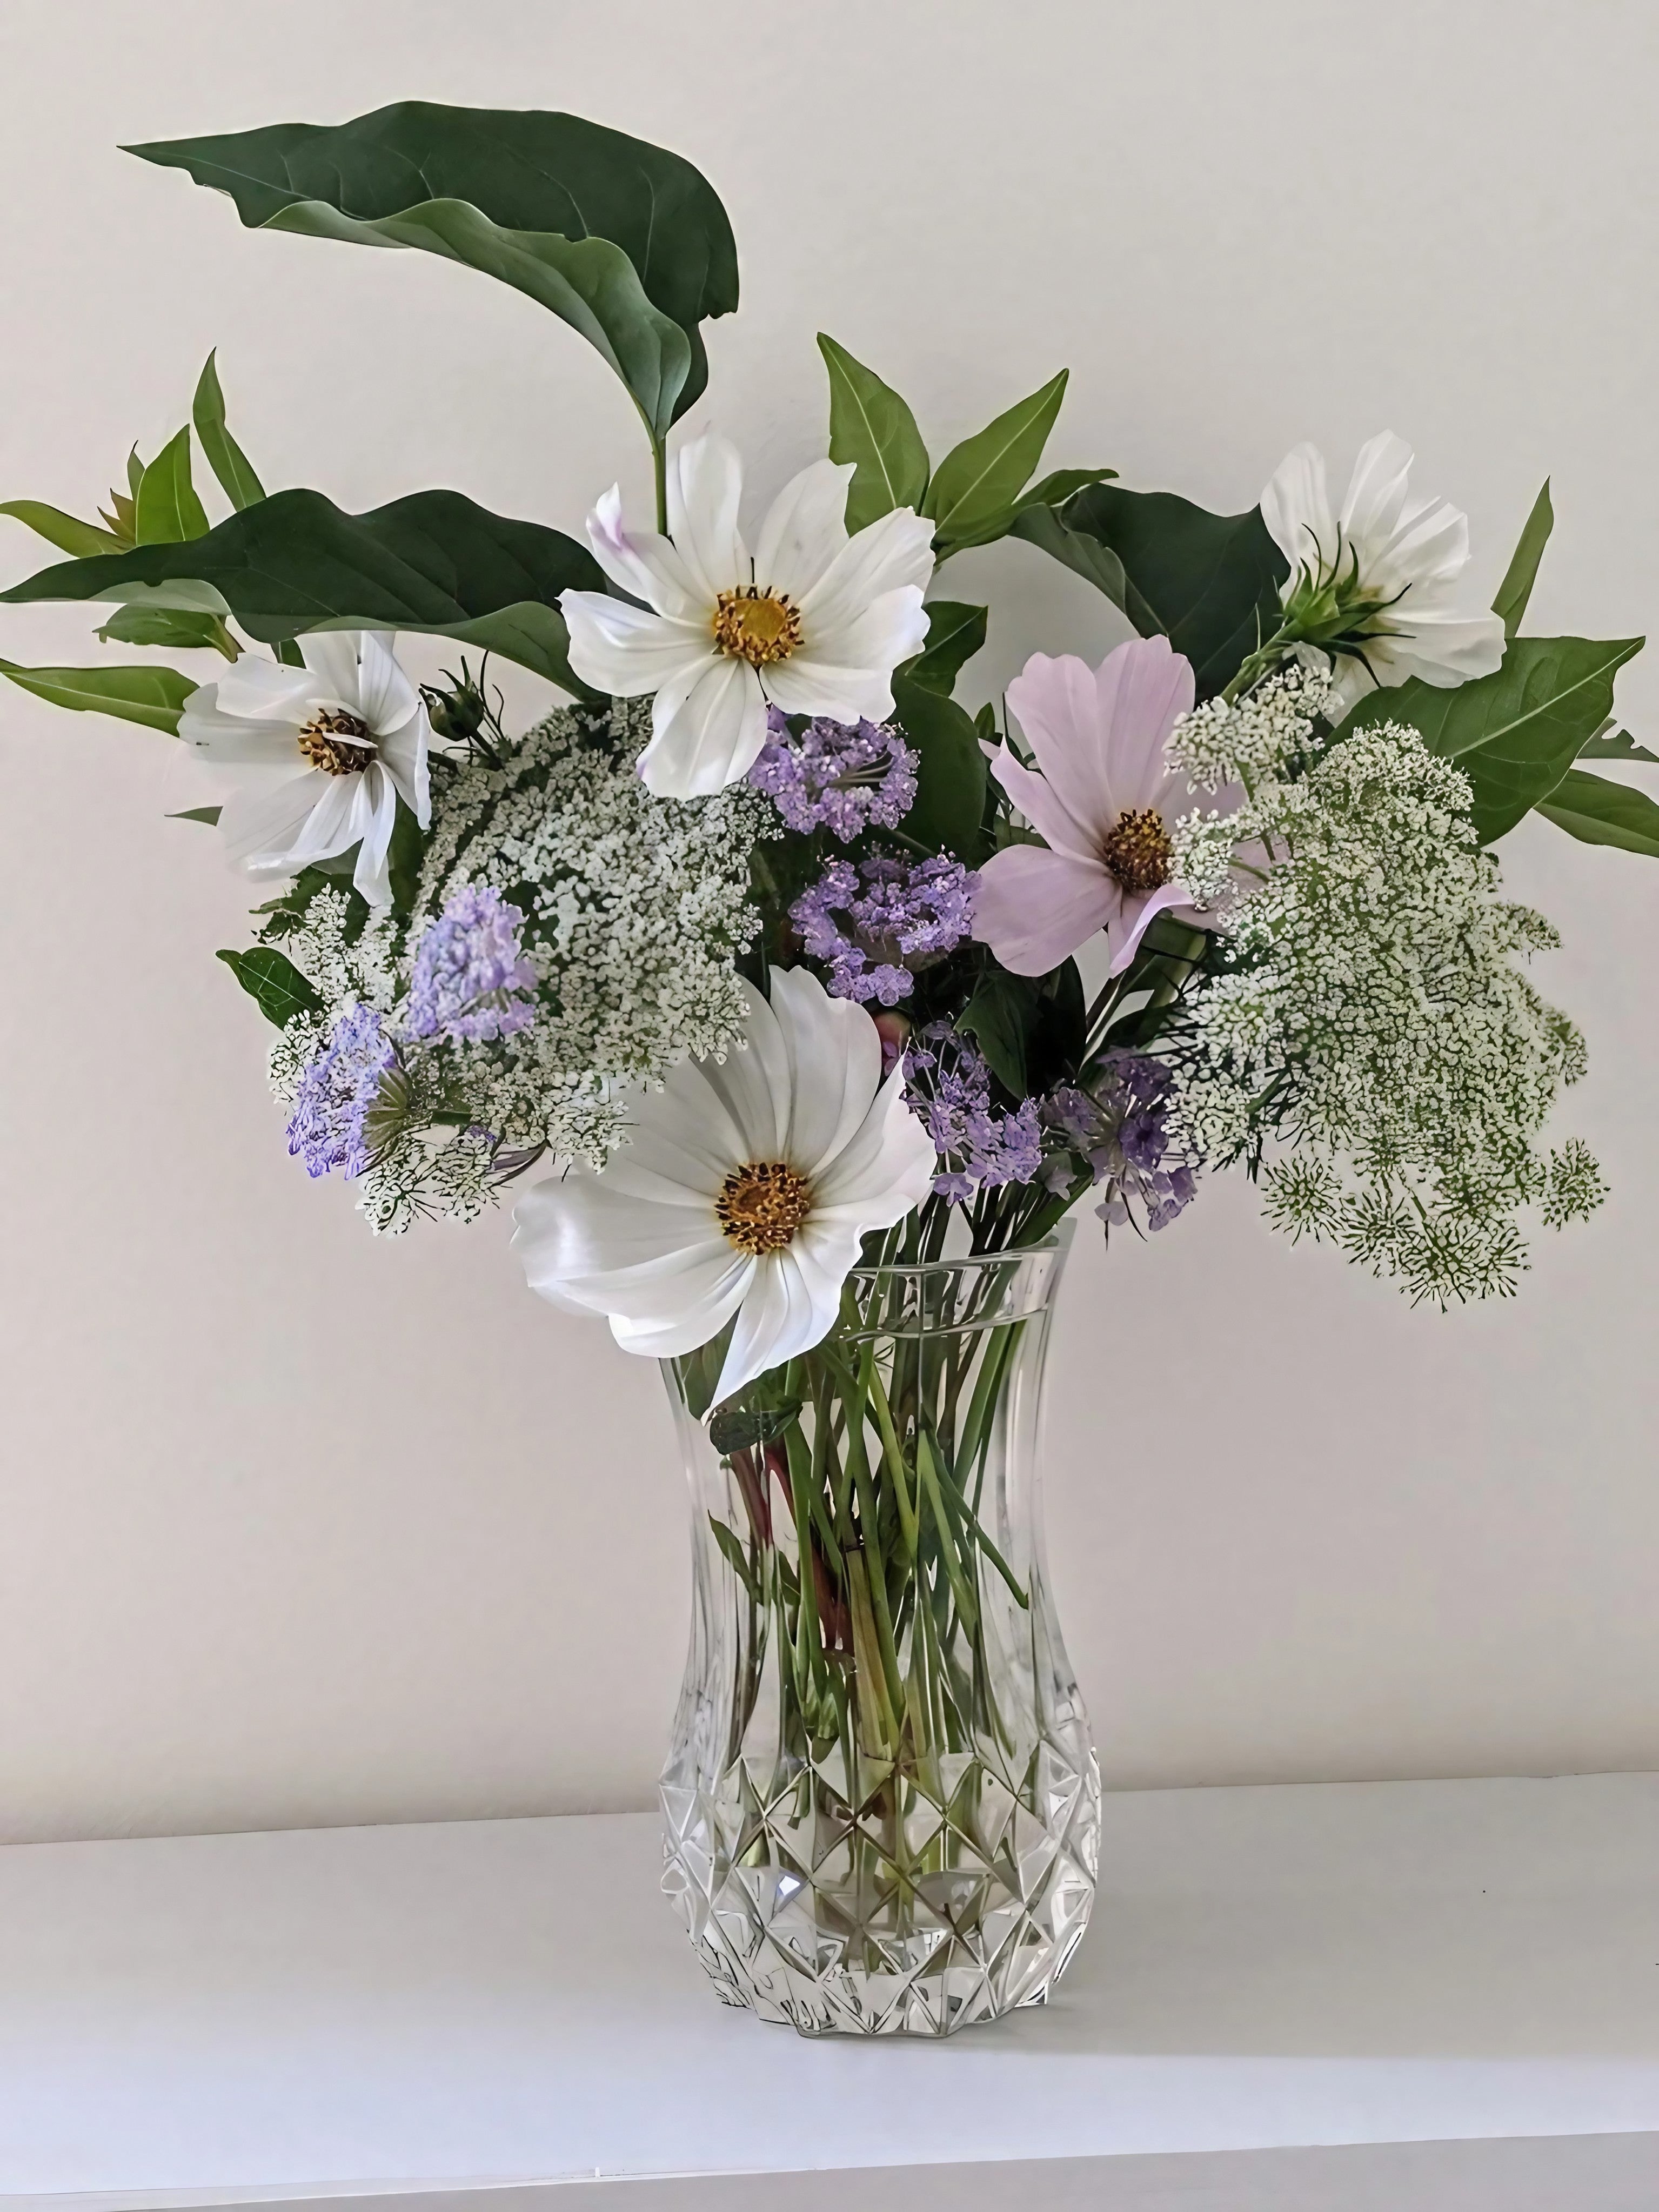 Arrangement of Cosmos Purity flowers in a vase